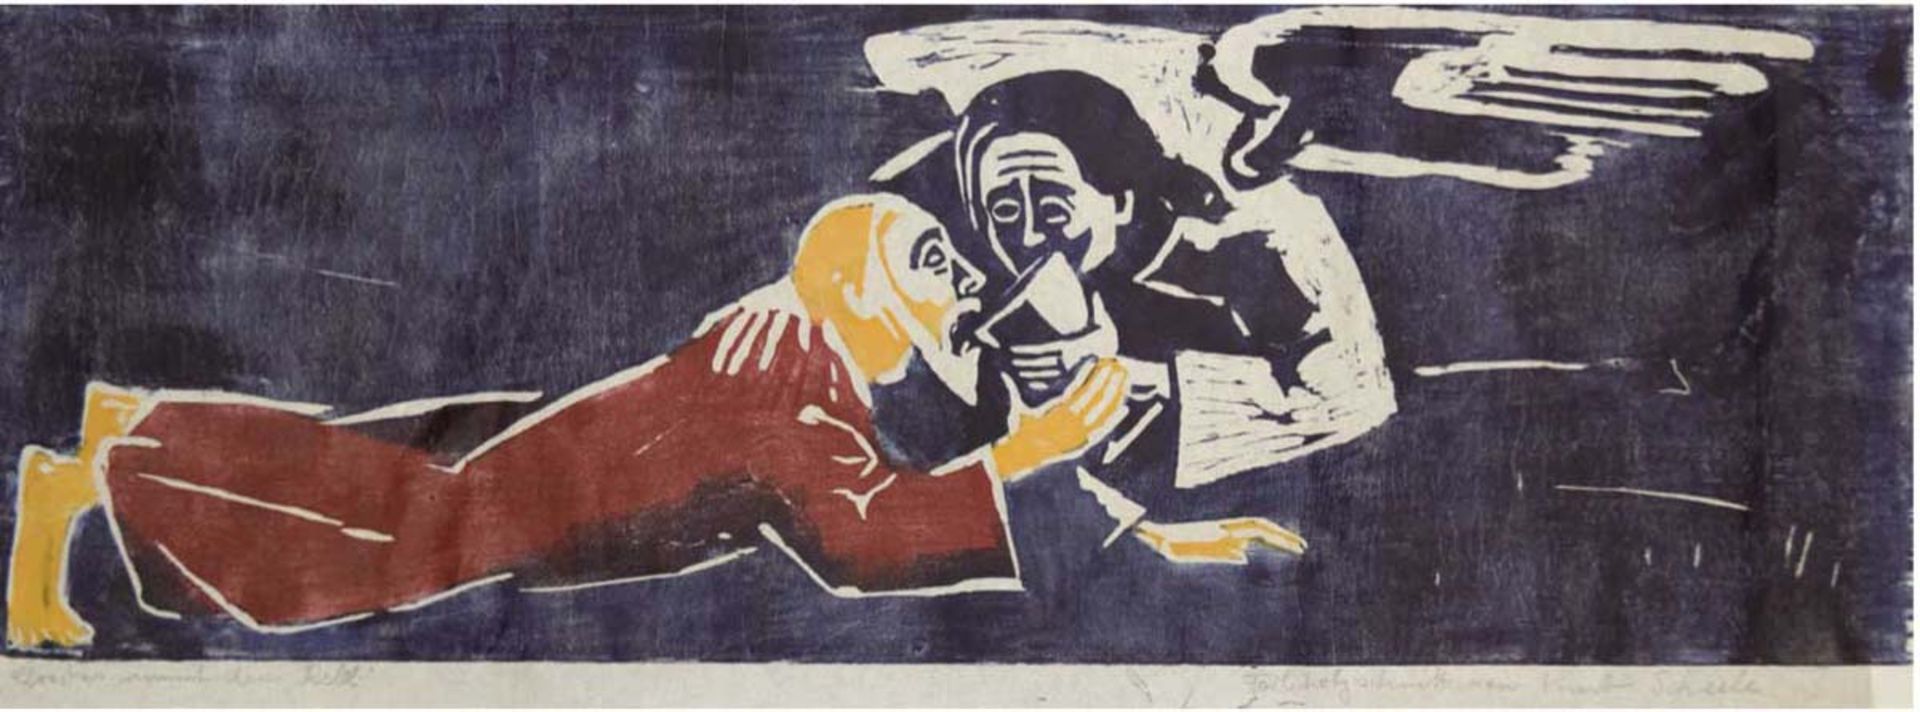 Scheele, Kurt (1905 Frankfurt-1944 Smolensk) "Christus nimmt den Kelch", Farbholzschnitt,signiert